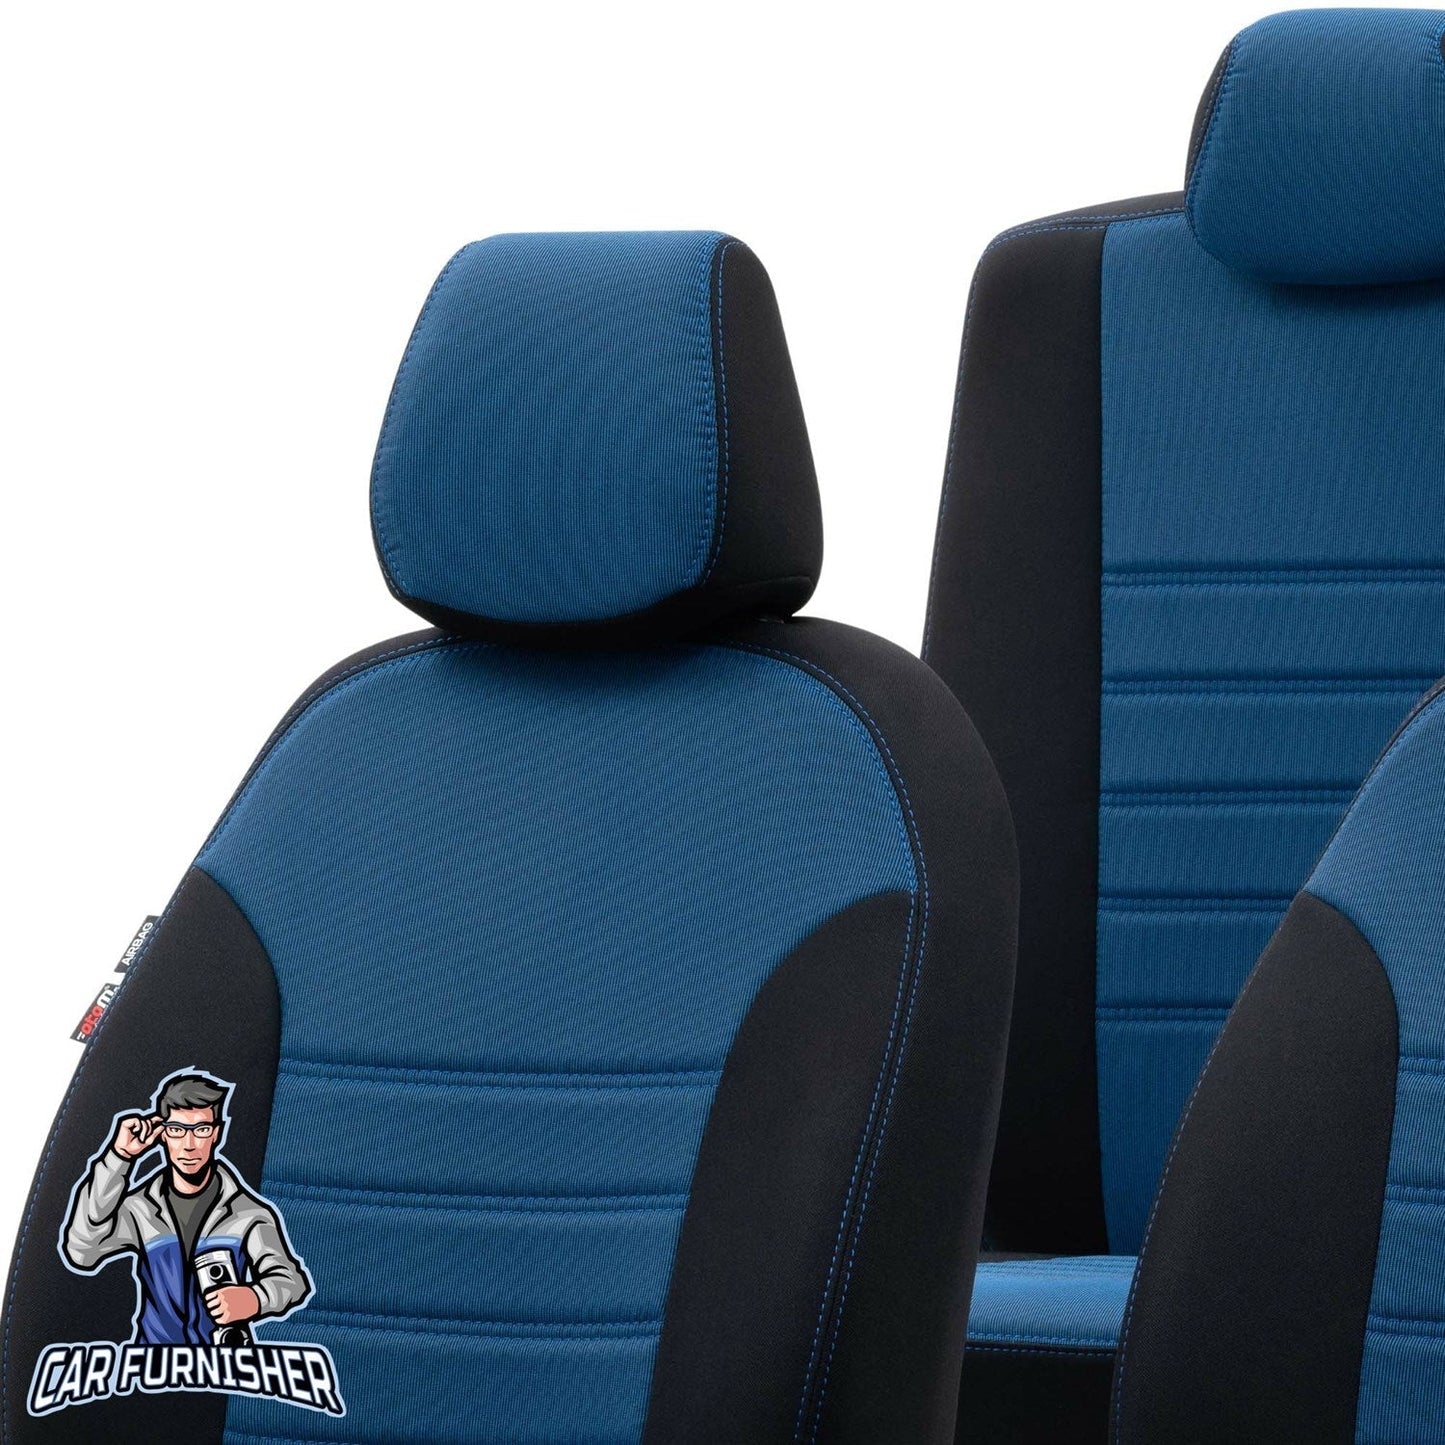 Suzuki Alto Seat Covers Original Jacquard Design Blue Jacquard Fabric